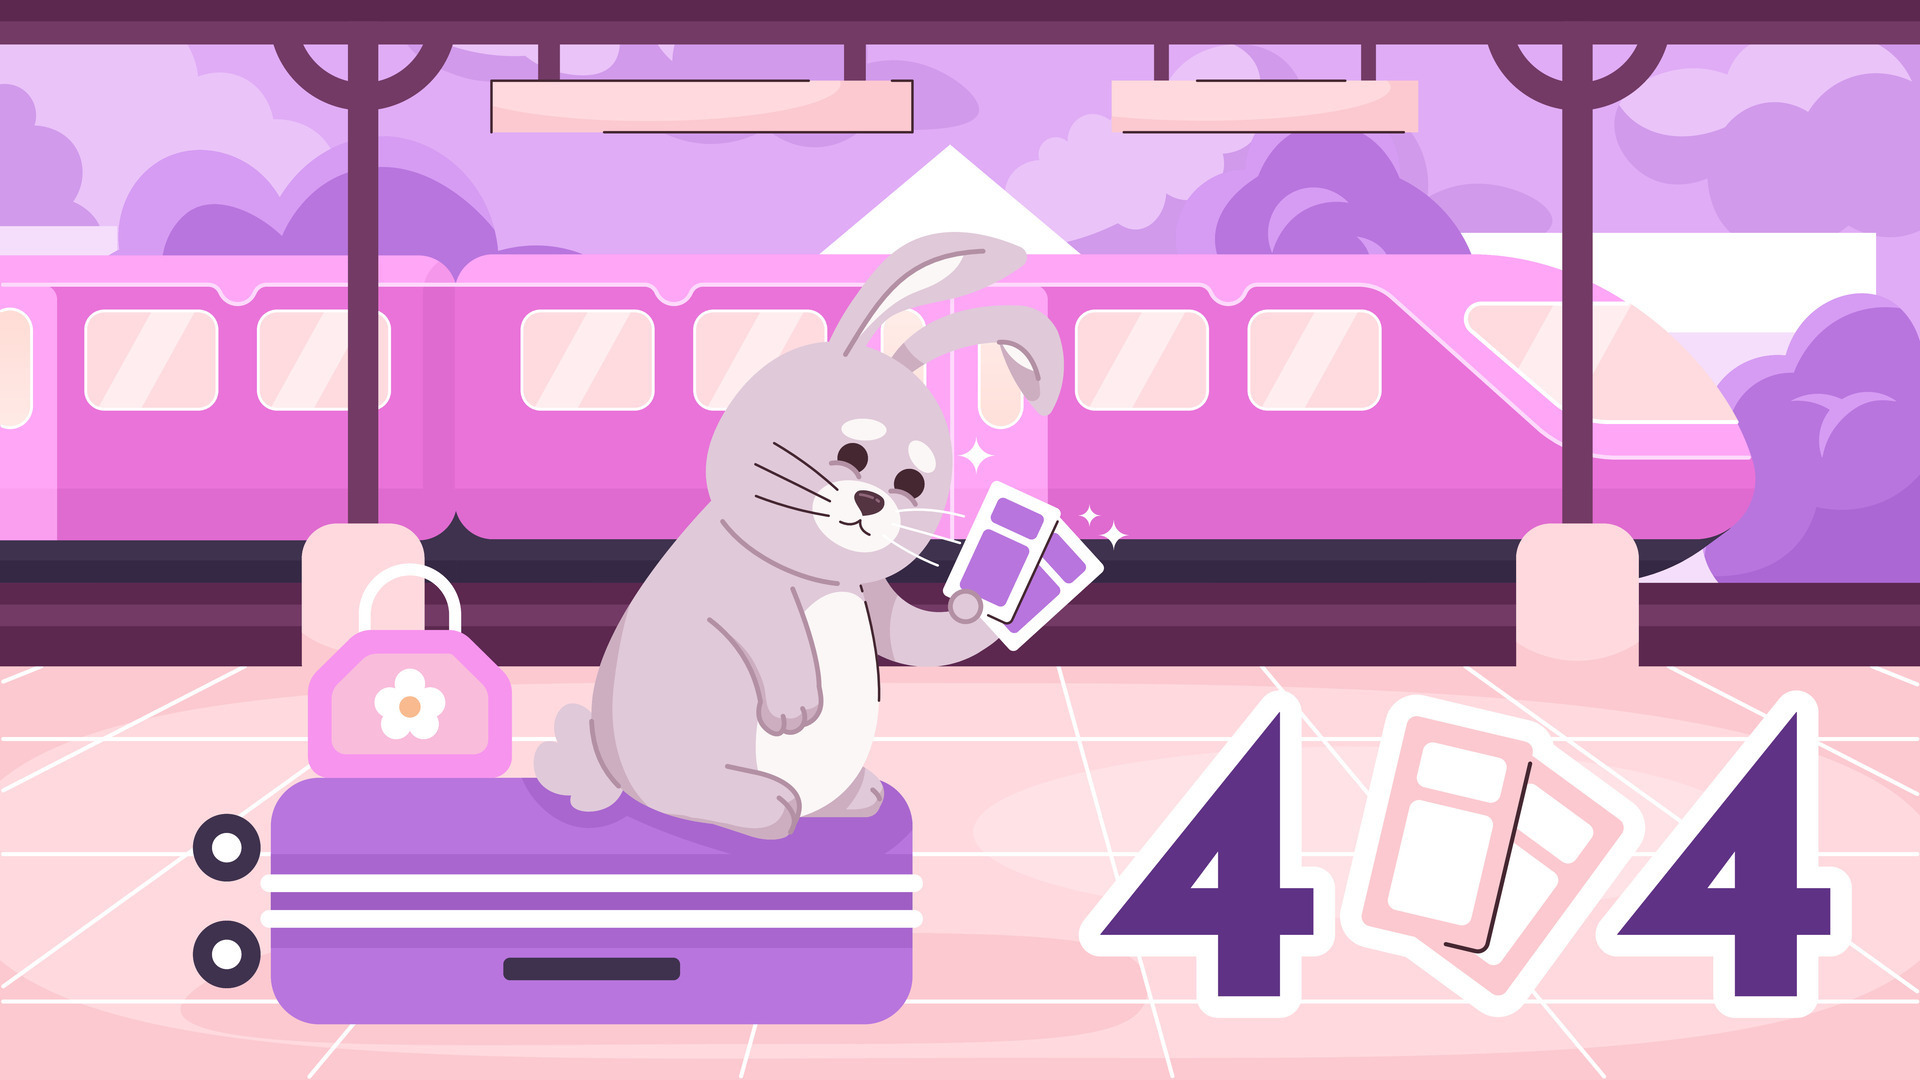 Traveler rabbit on station error 404 flash message. Luggage bunny tourist.Website landing page ui design. Not found cartoon image, cute vibes. Vectorflat illustration with kawaii anime background 27989614 Vector Art